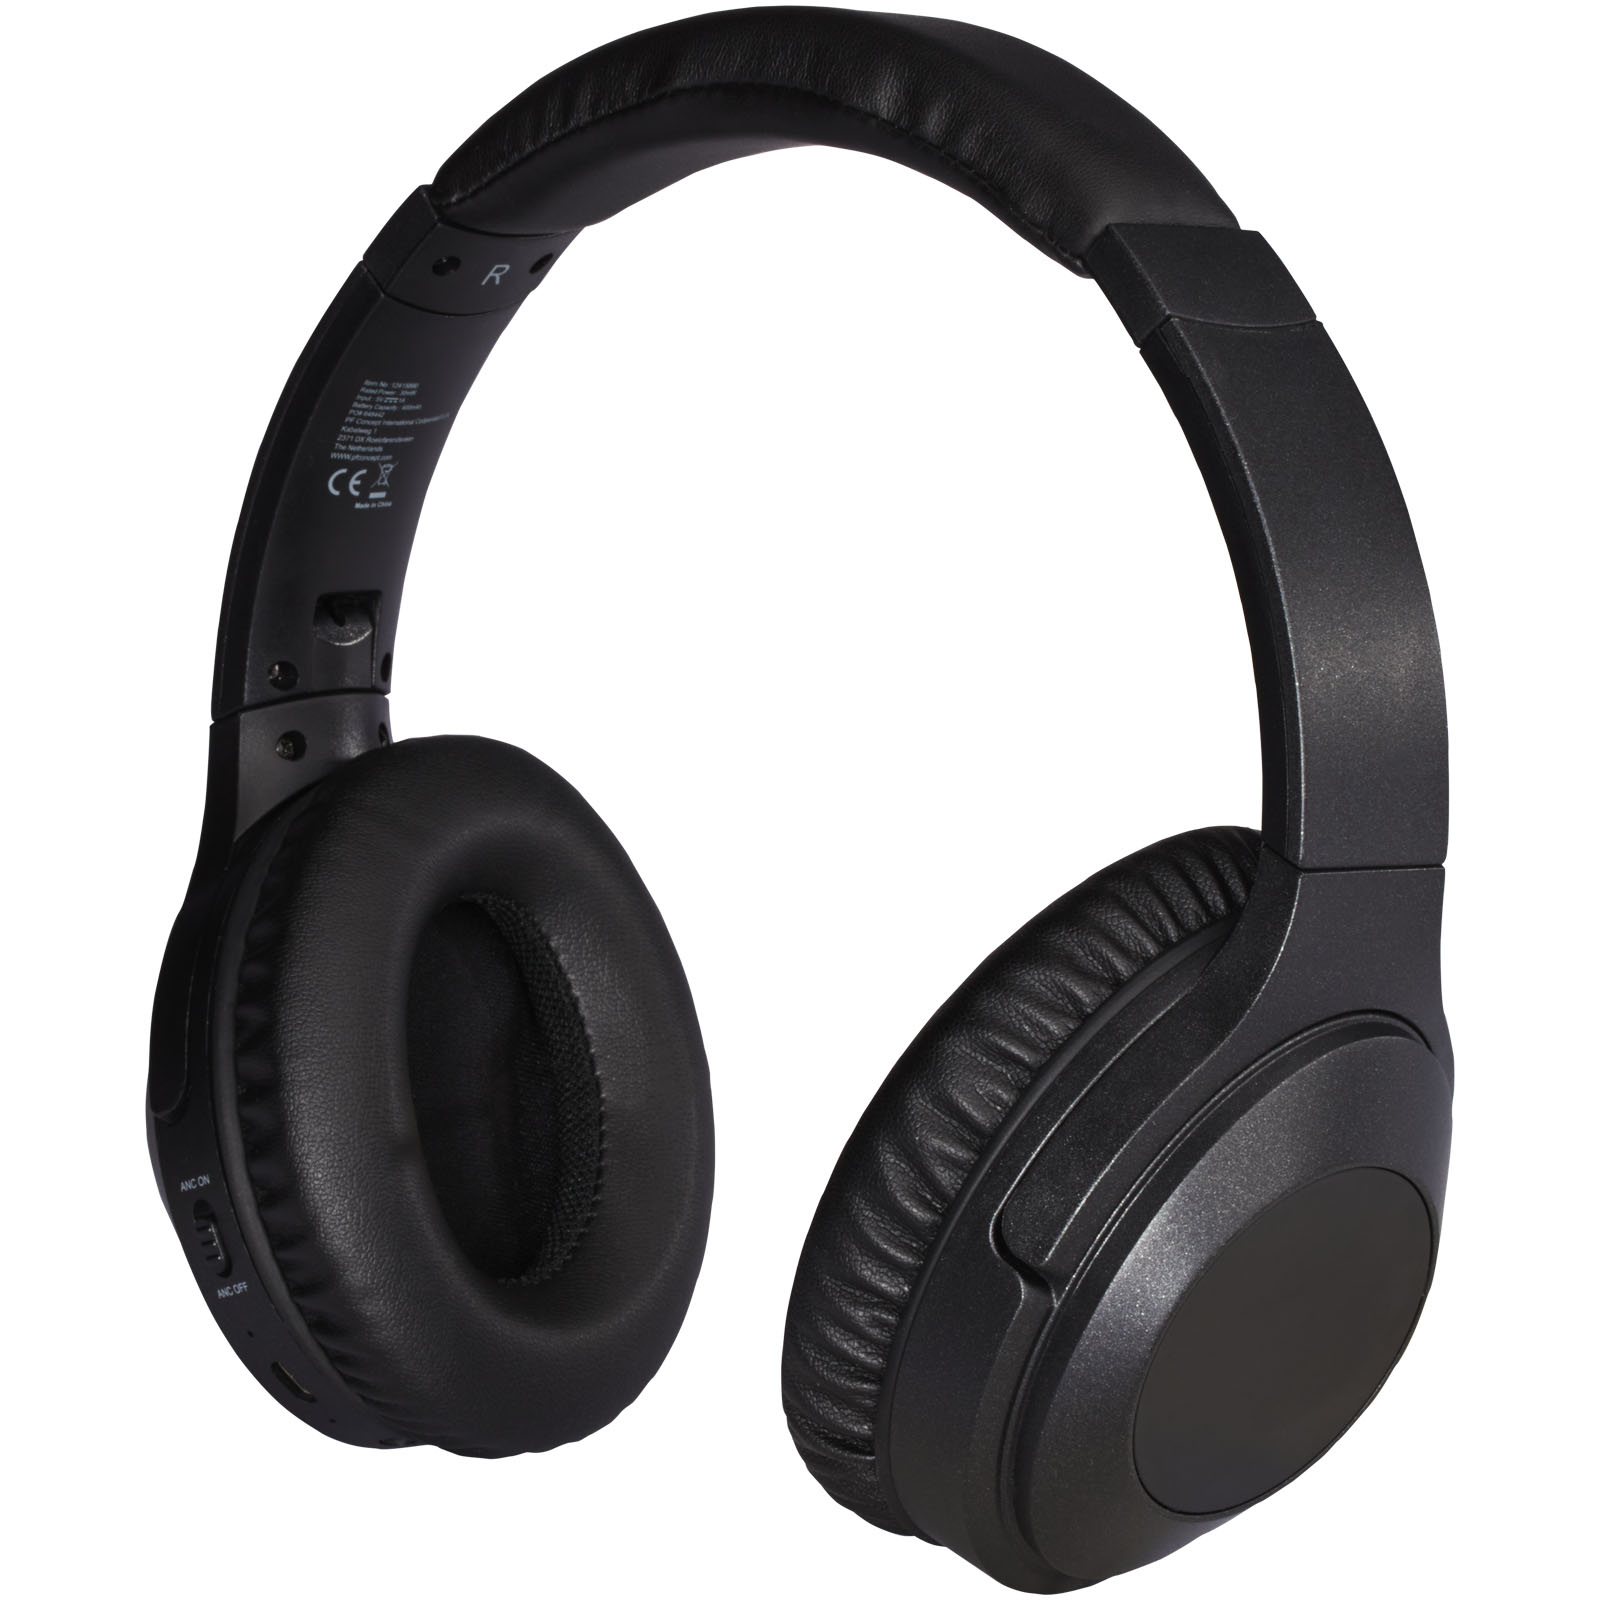 Technology - Anton ANC headphones